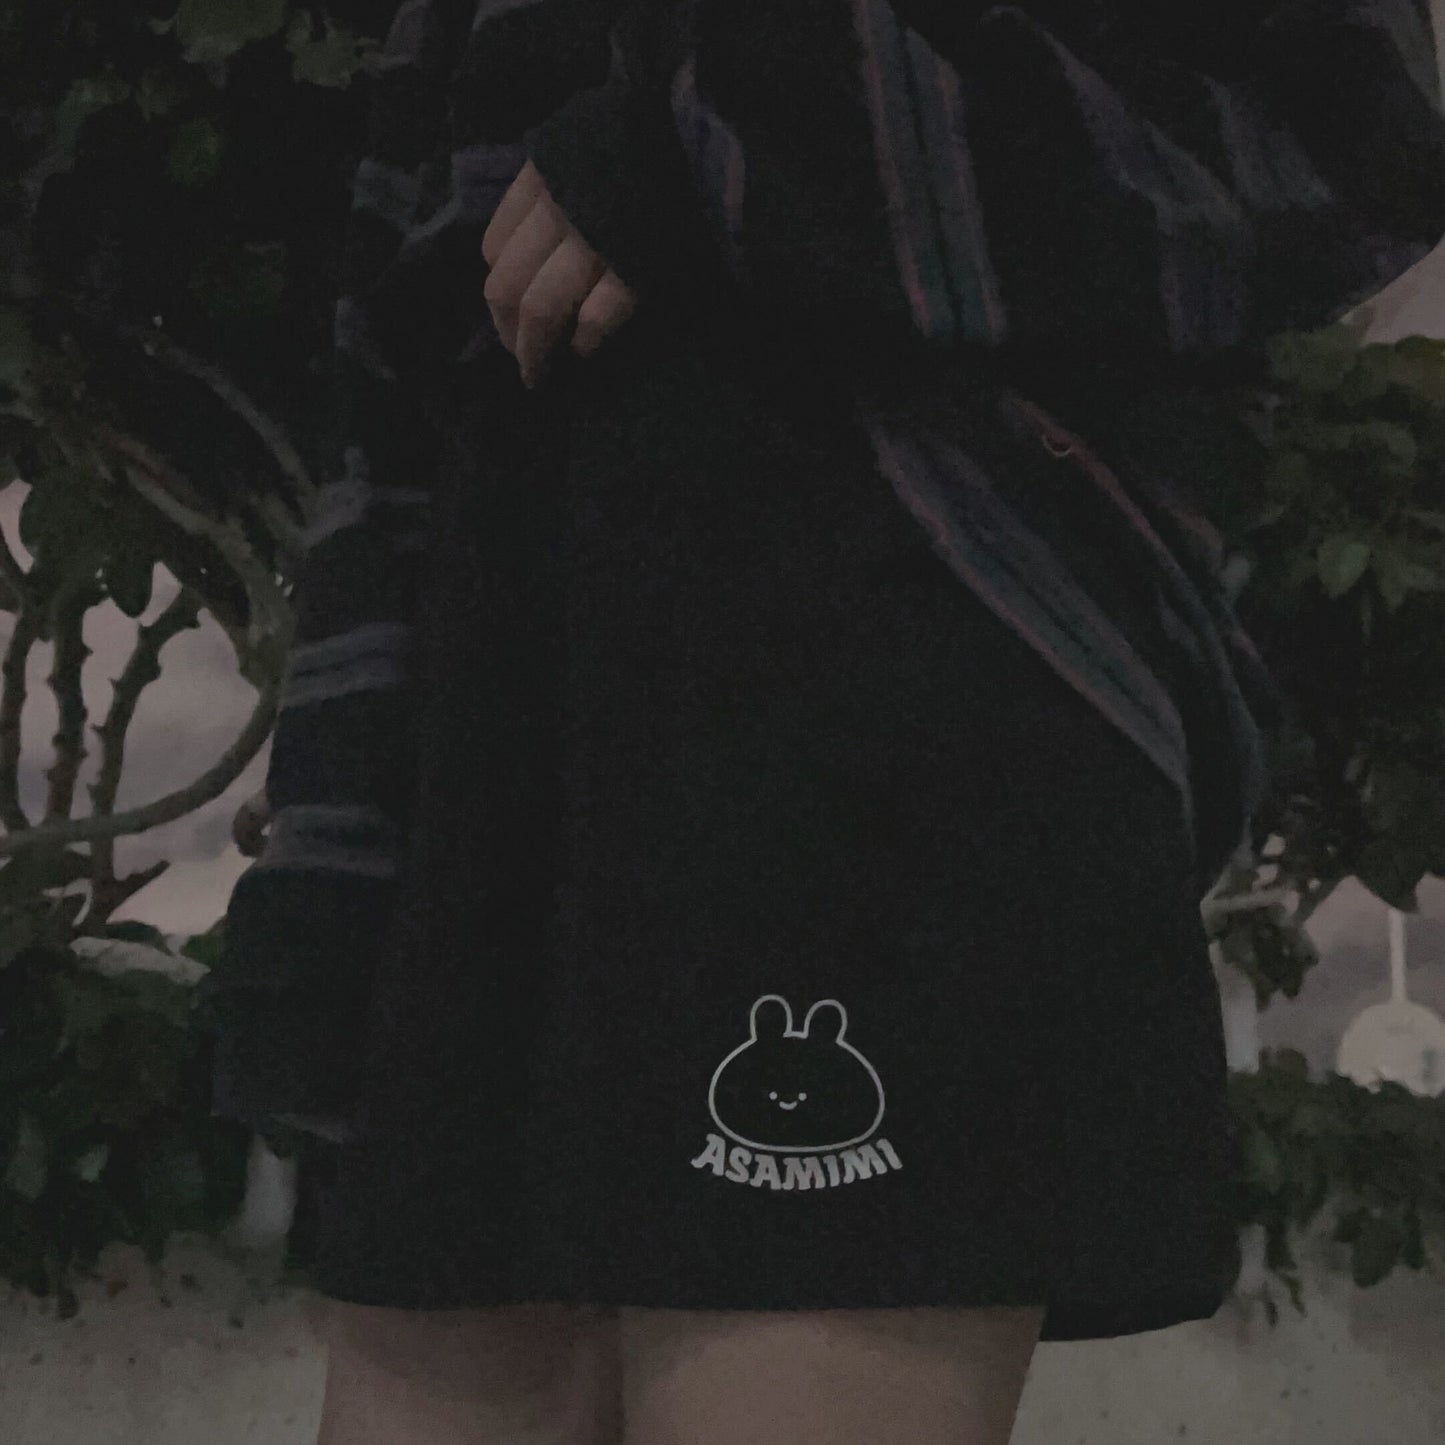 [Asamimi-chan] Nylon shorts (Asamimi BASIC May) [Shipped in mid-July]